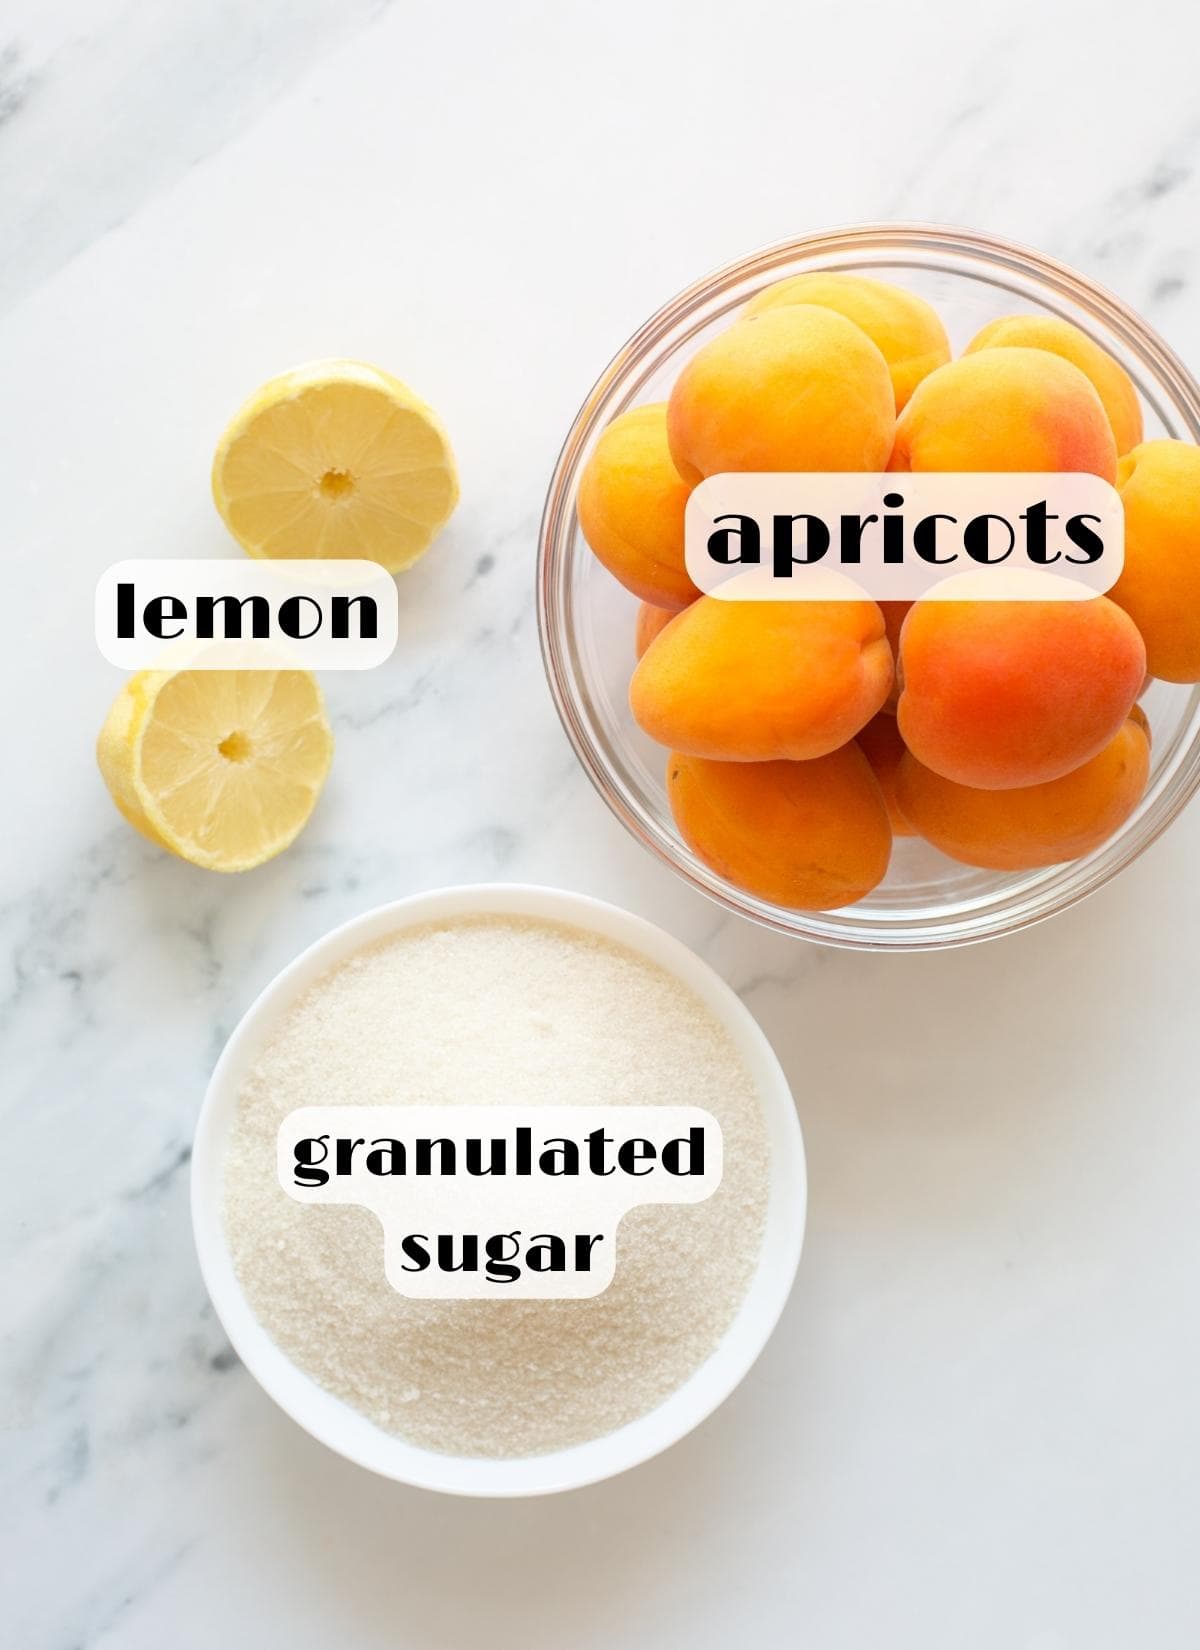 apricot jam ignredients: apricots, lemon and sugar.